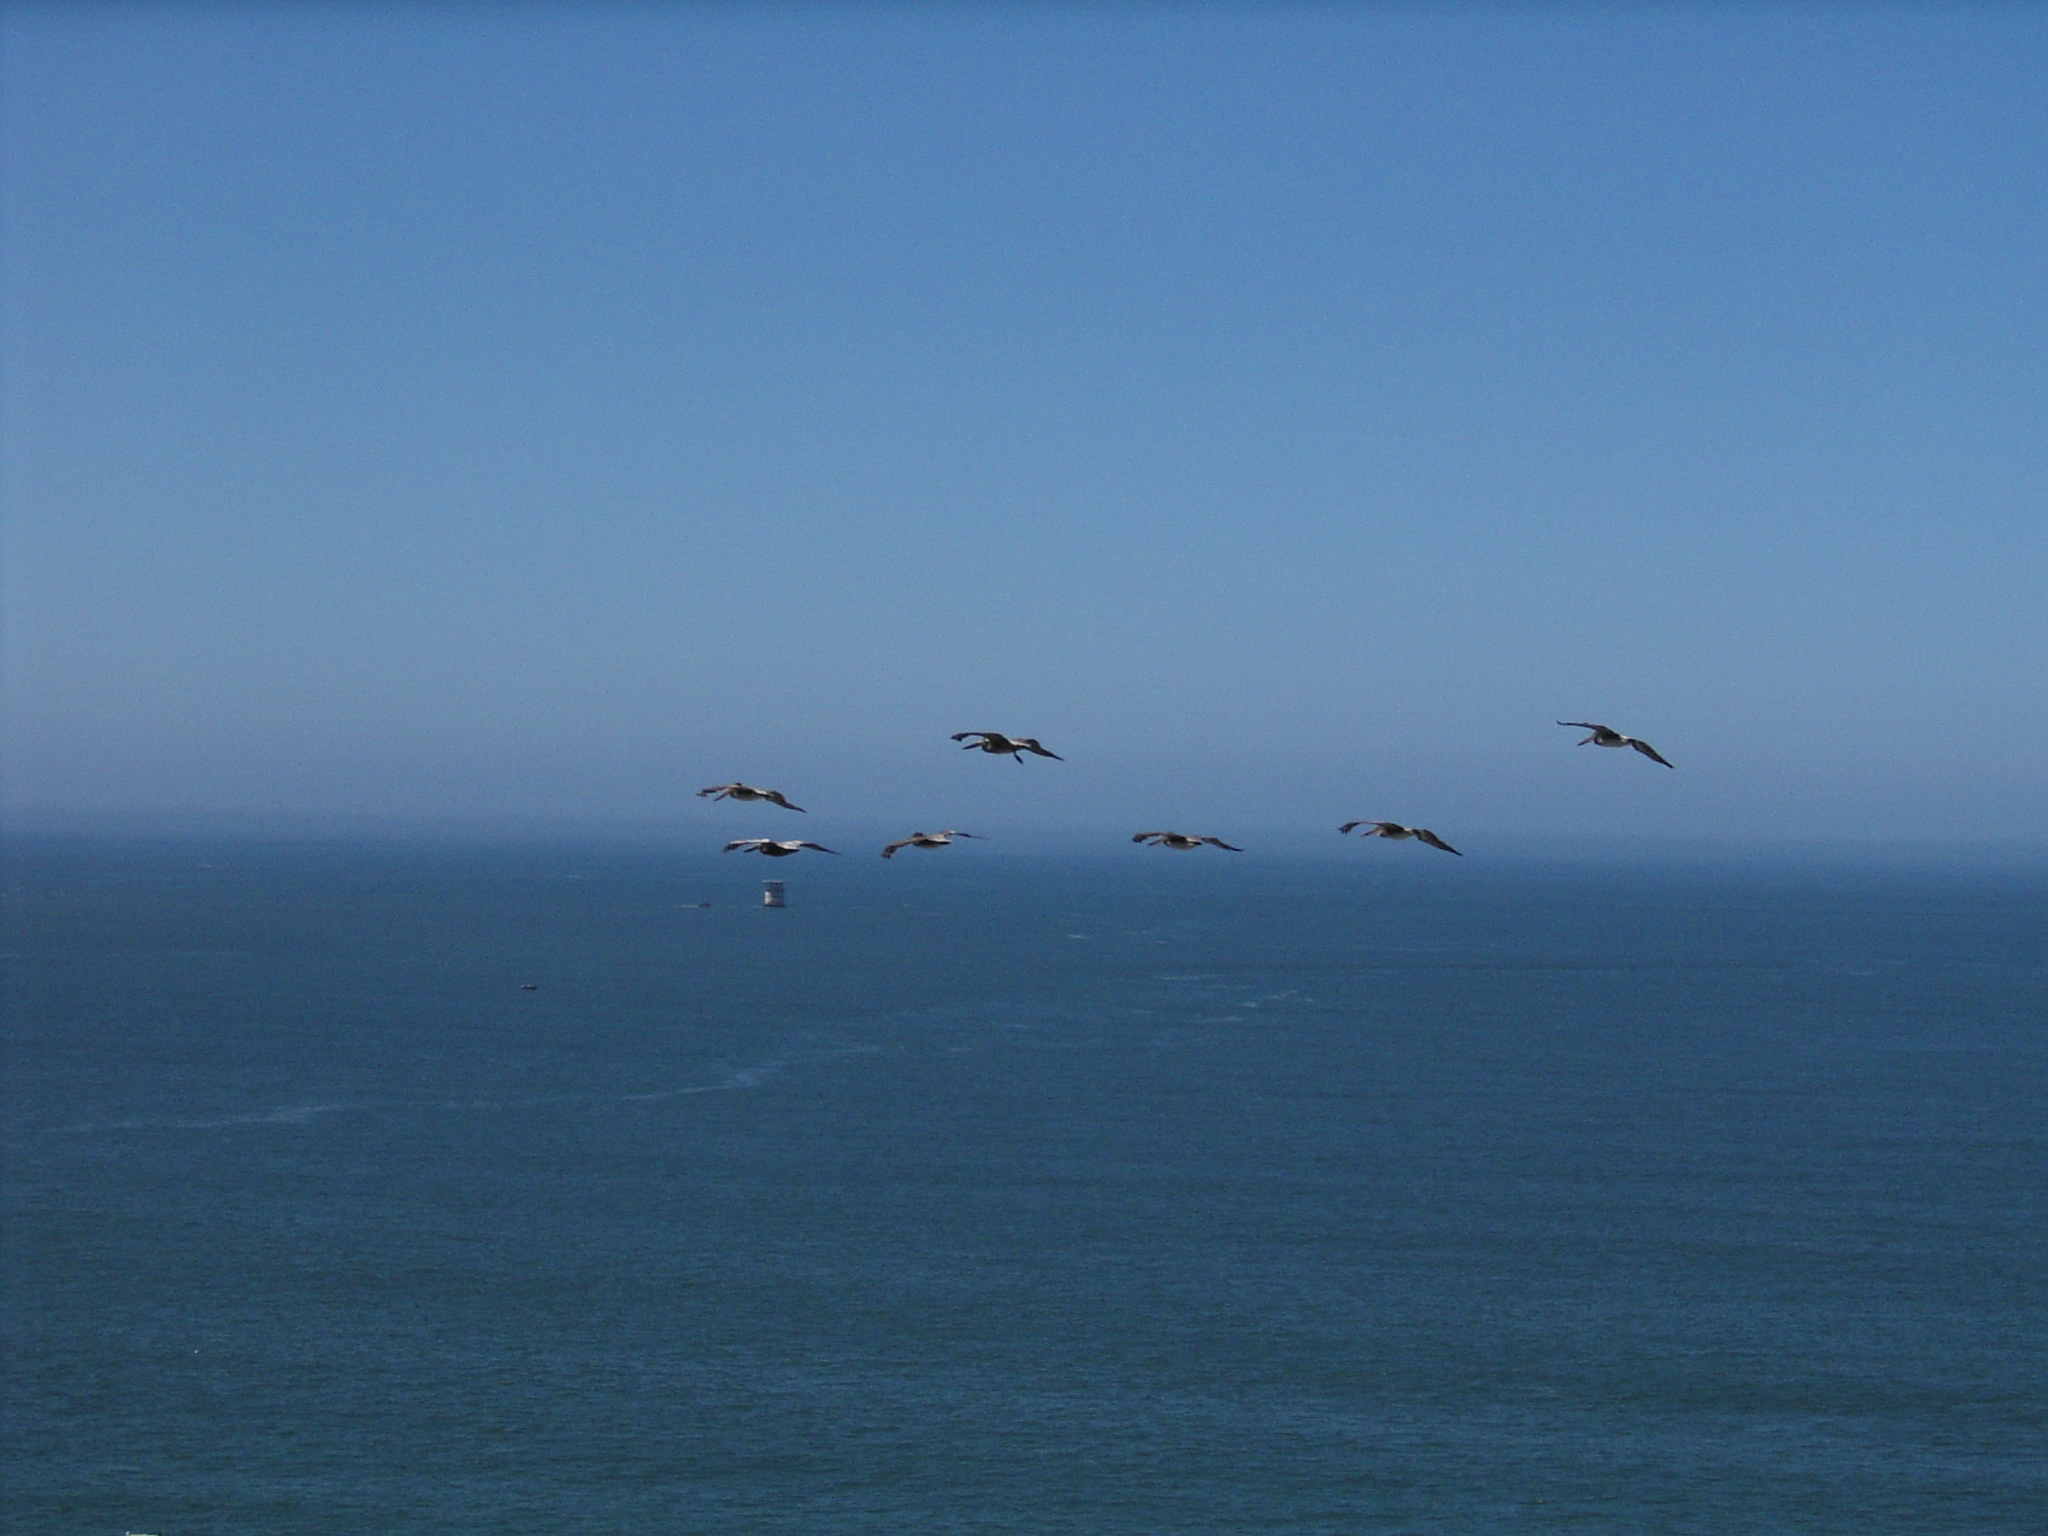 Pelicans dancing in the air